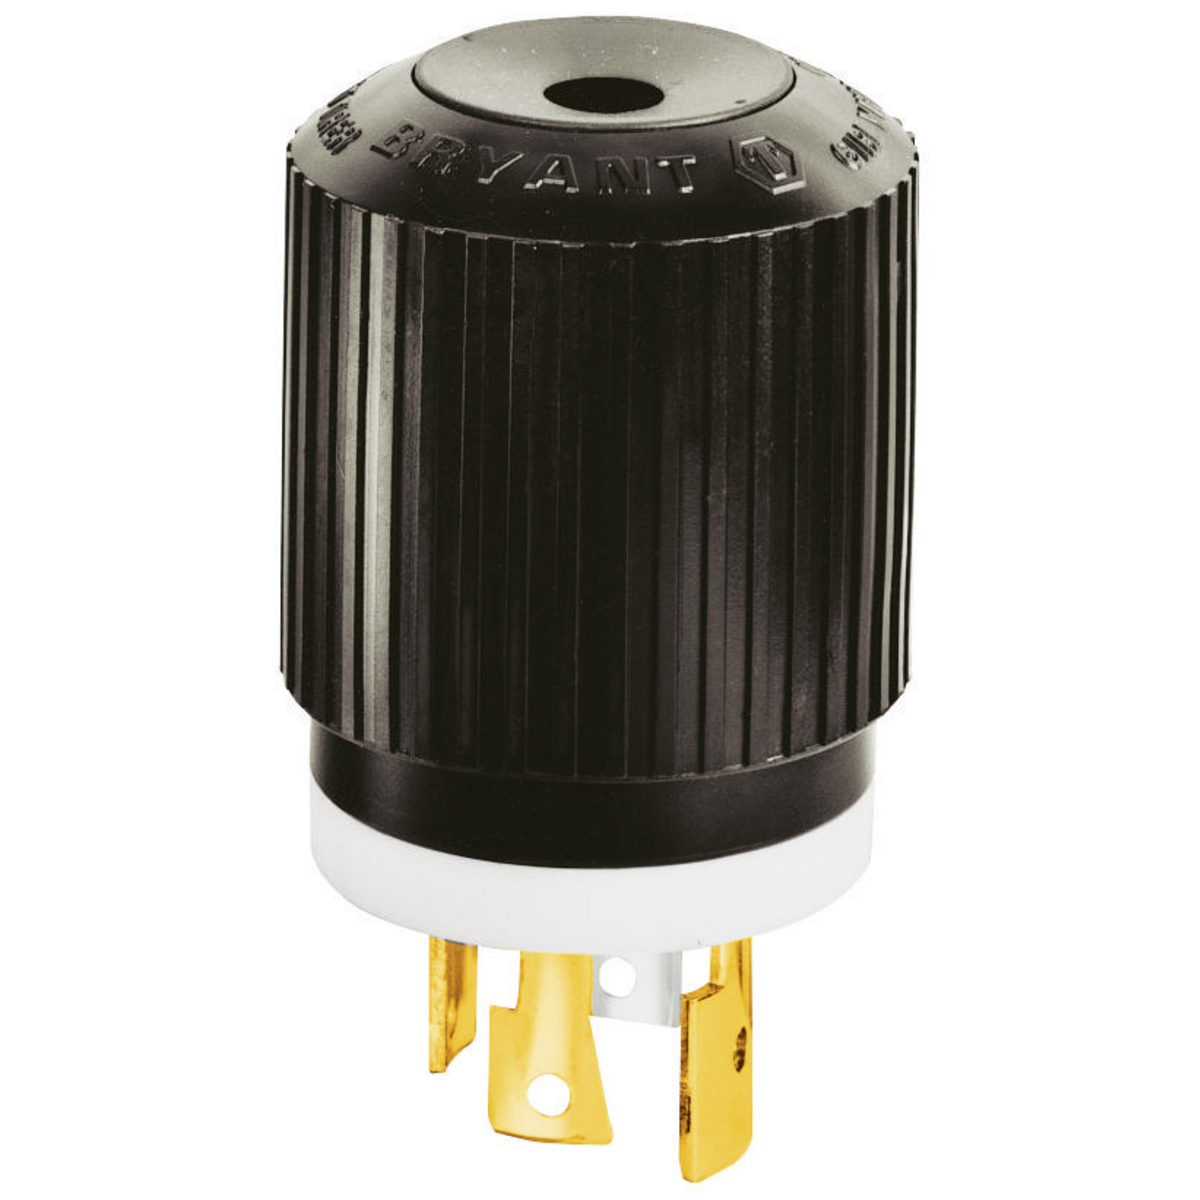 NEMA L20-30P Power Locking Twist-Lock Plug 30A 347/600V 3 Phase L20-30 